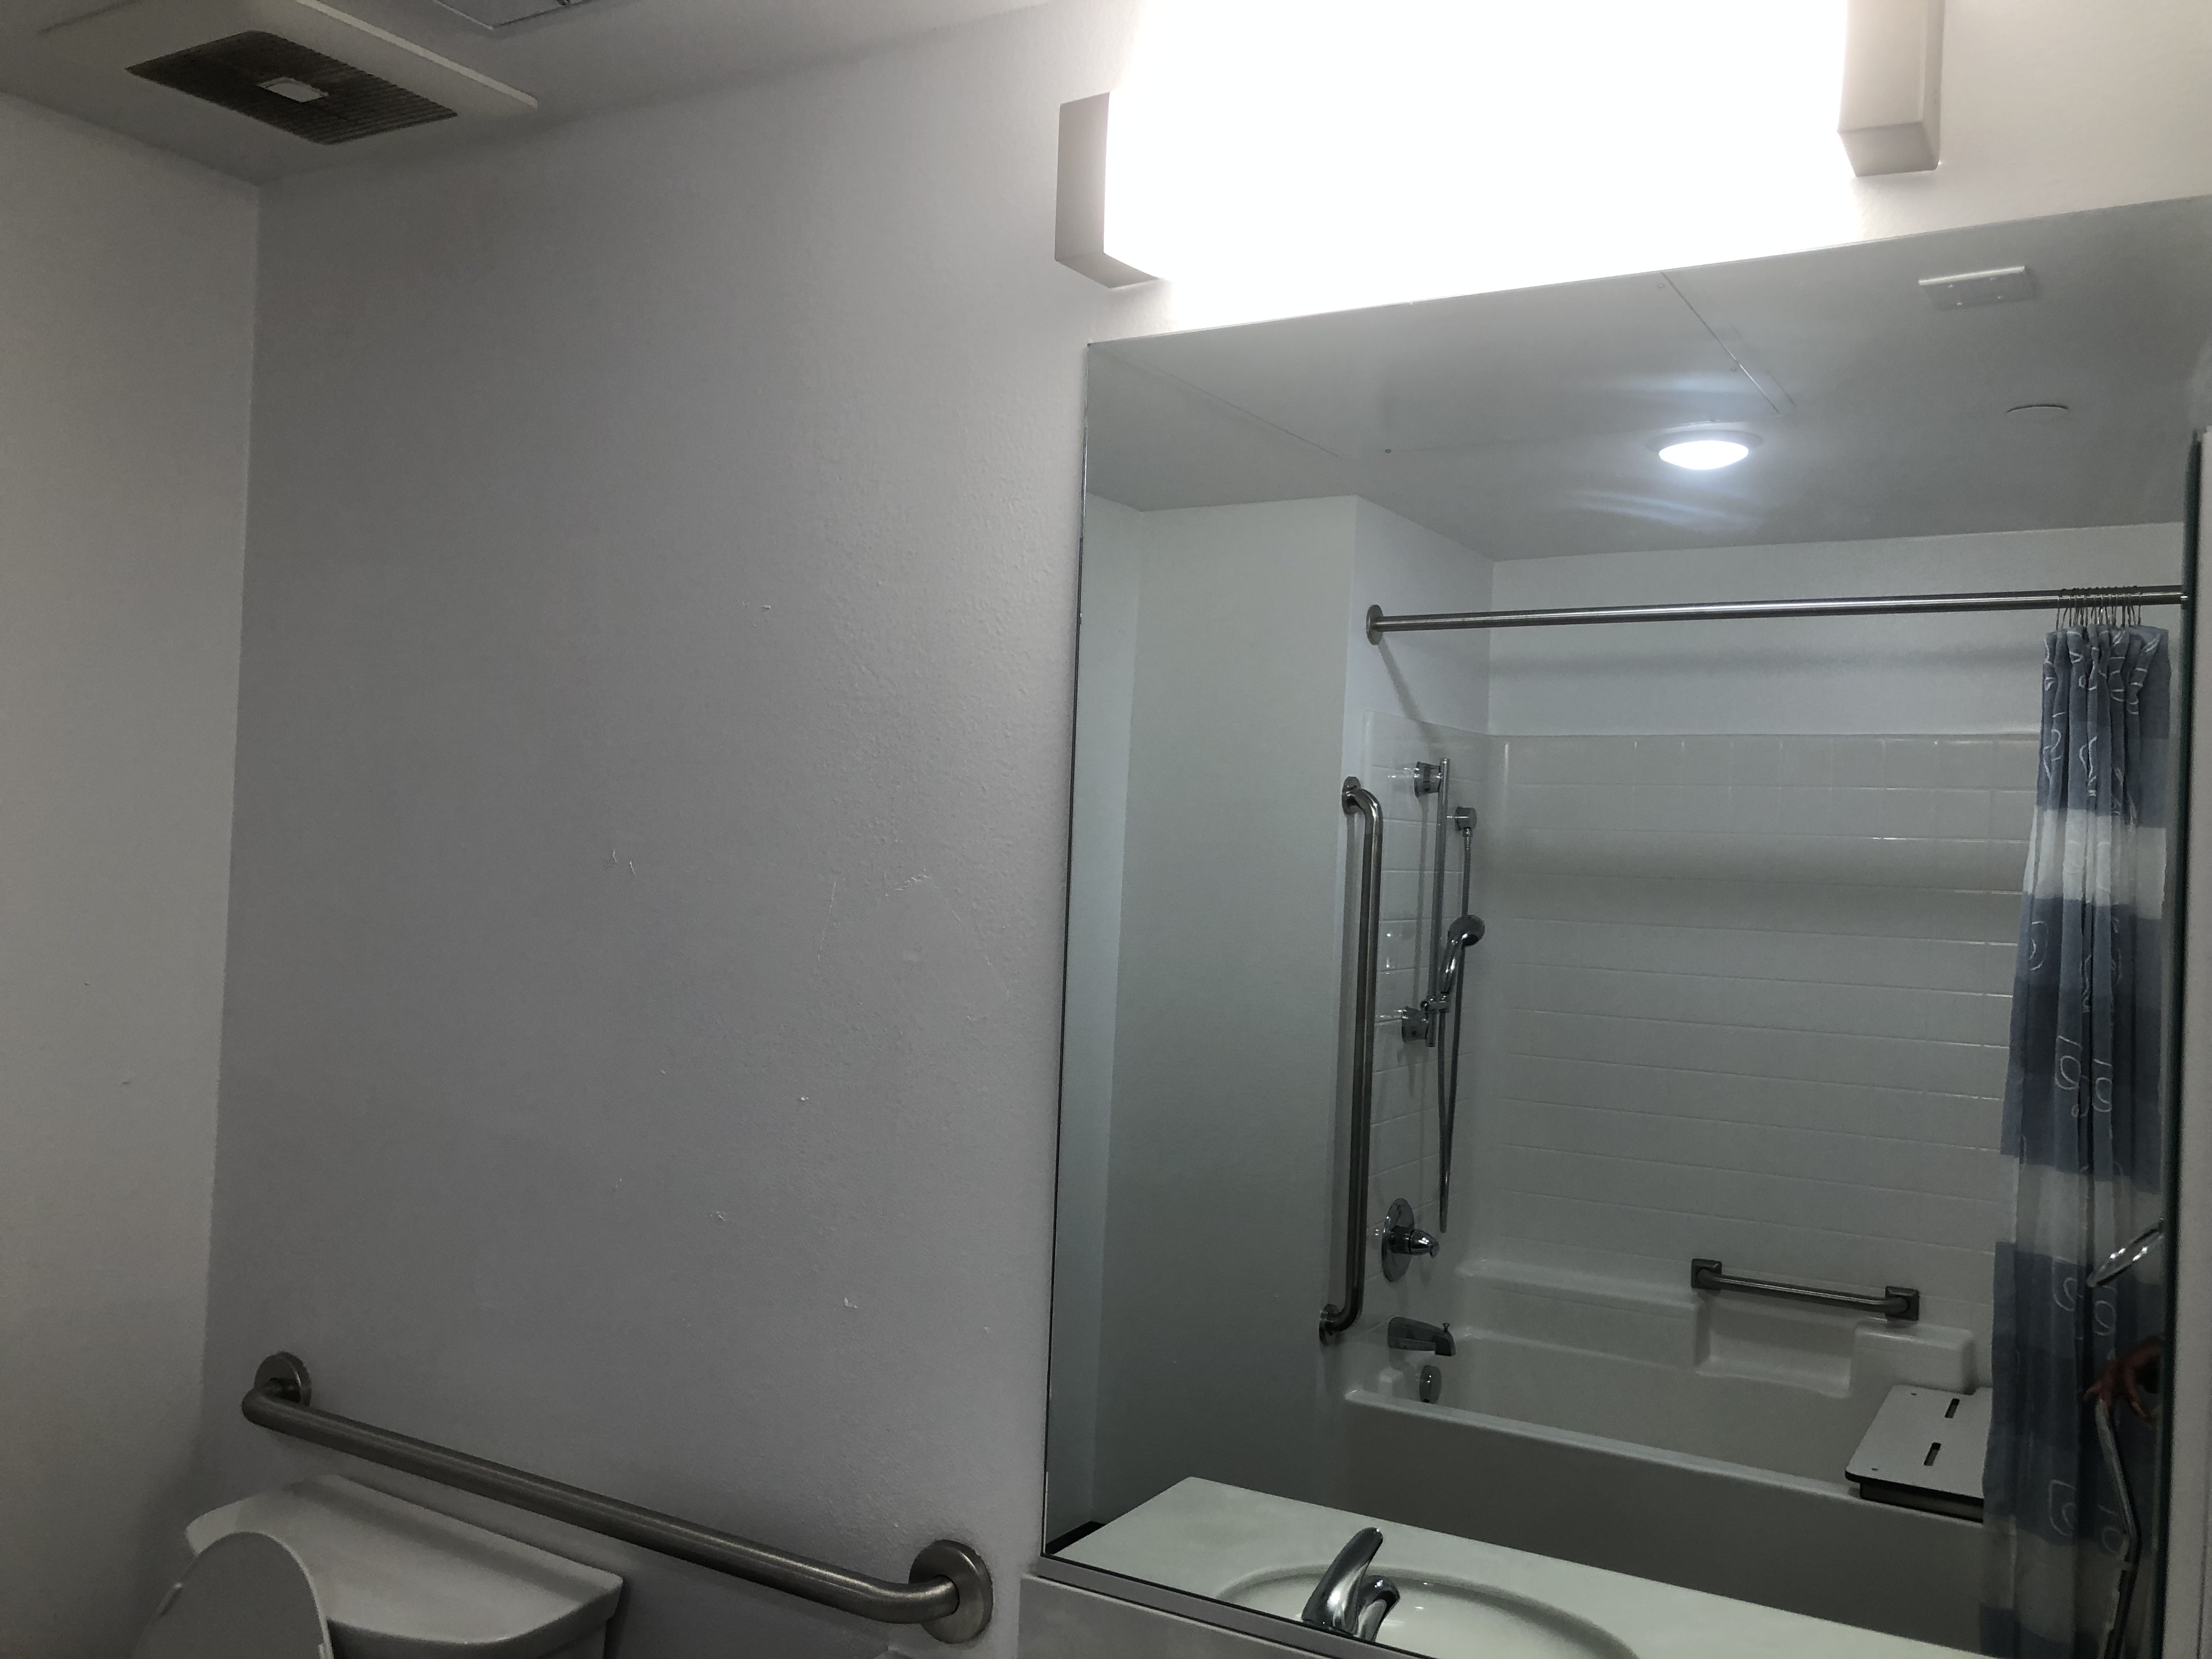 Photo of Unit Bathroom Mirror